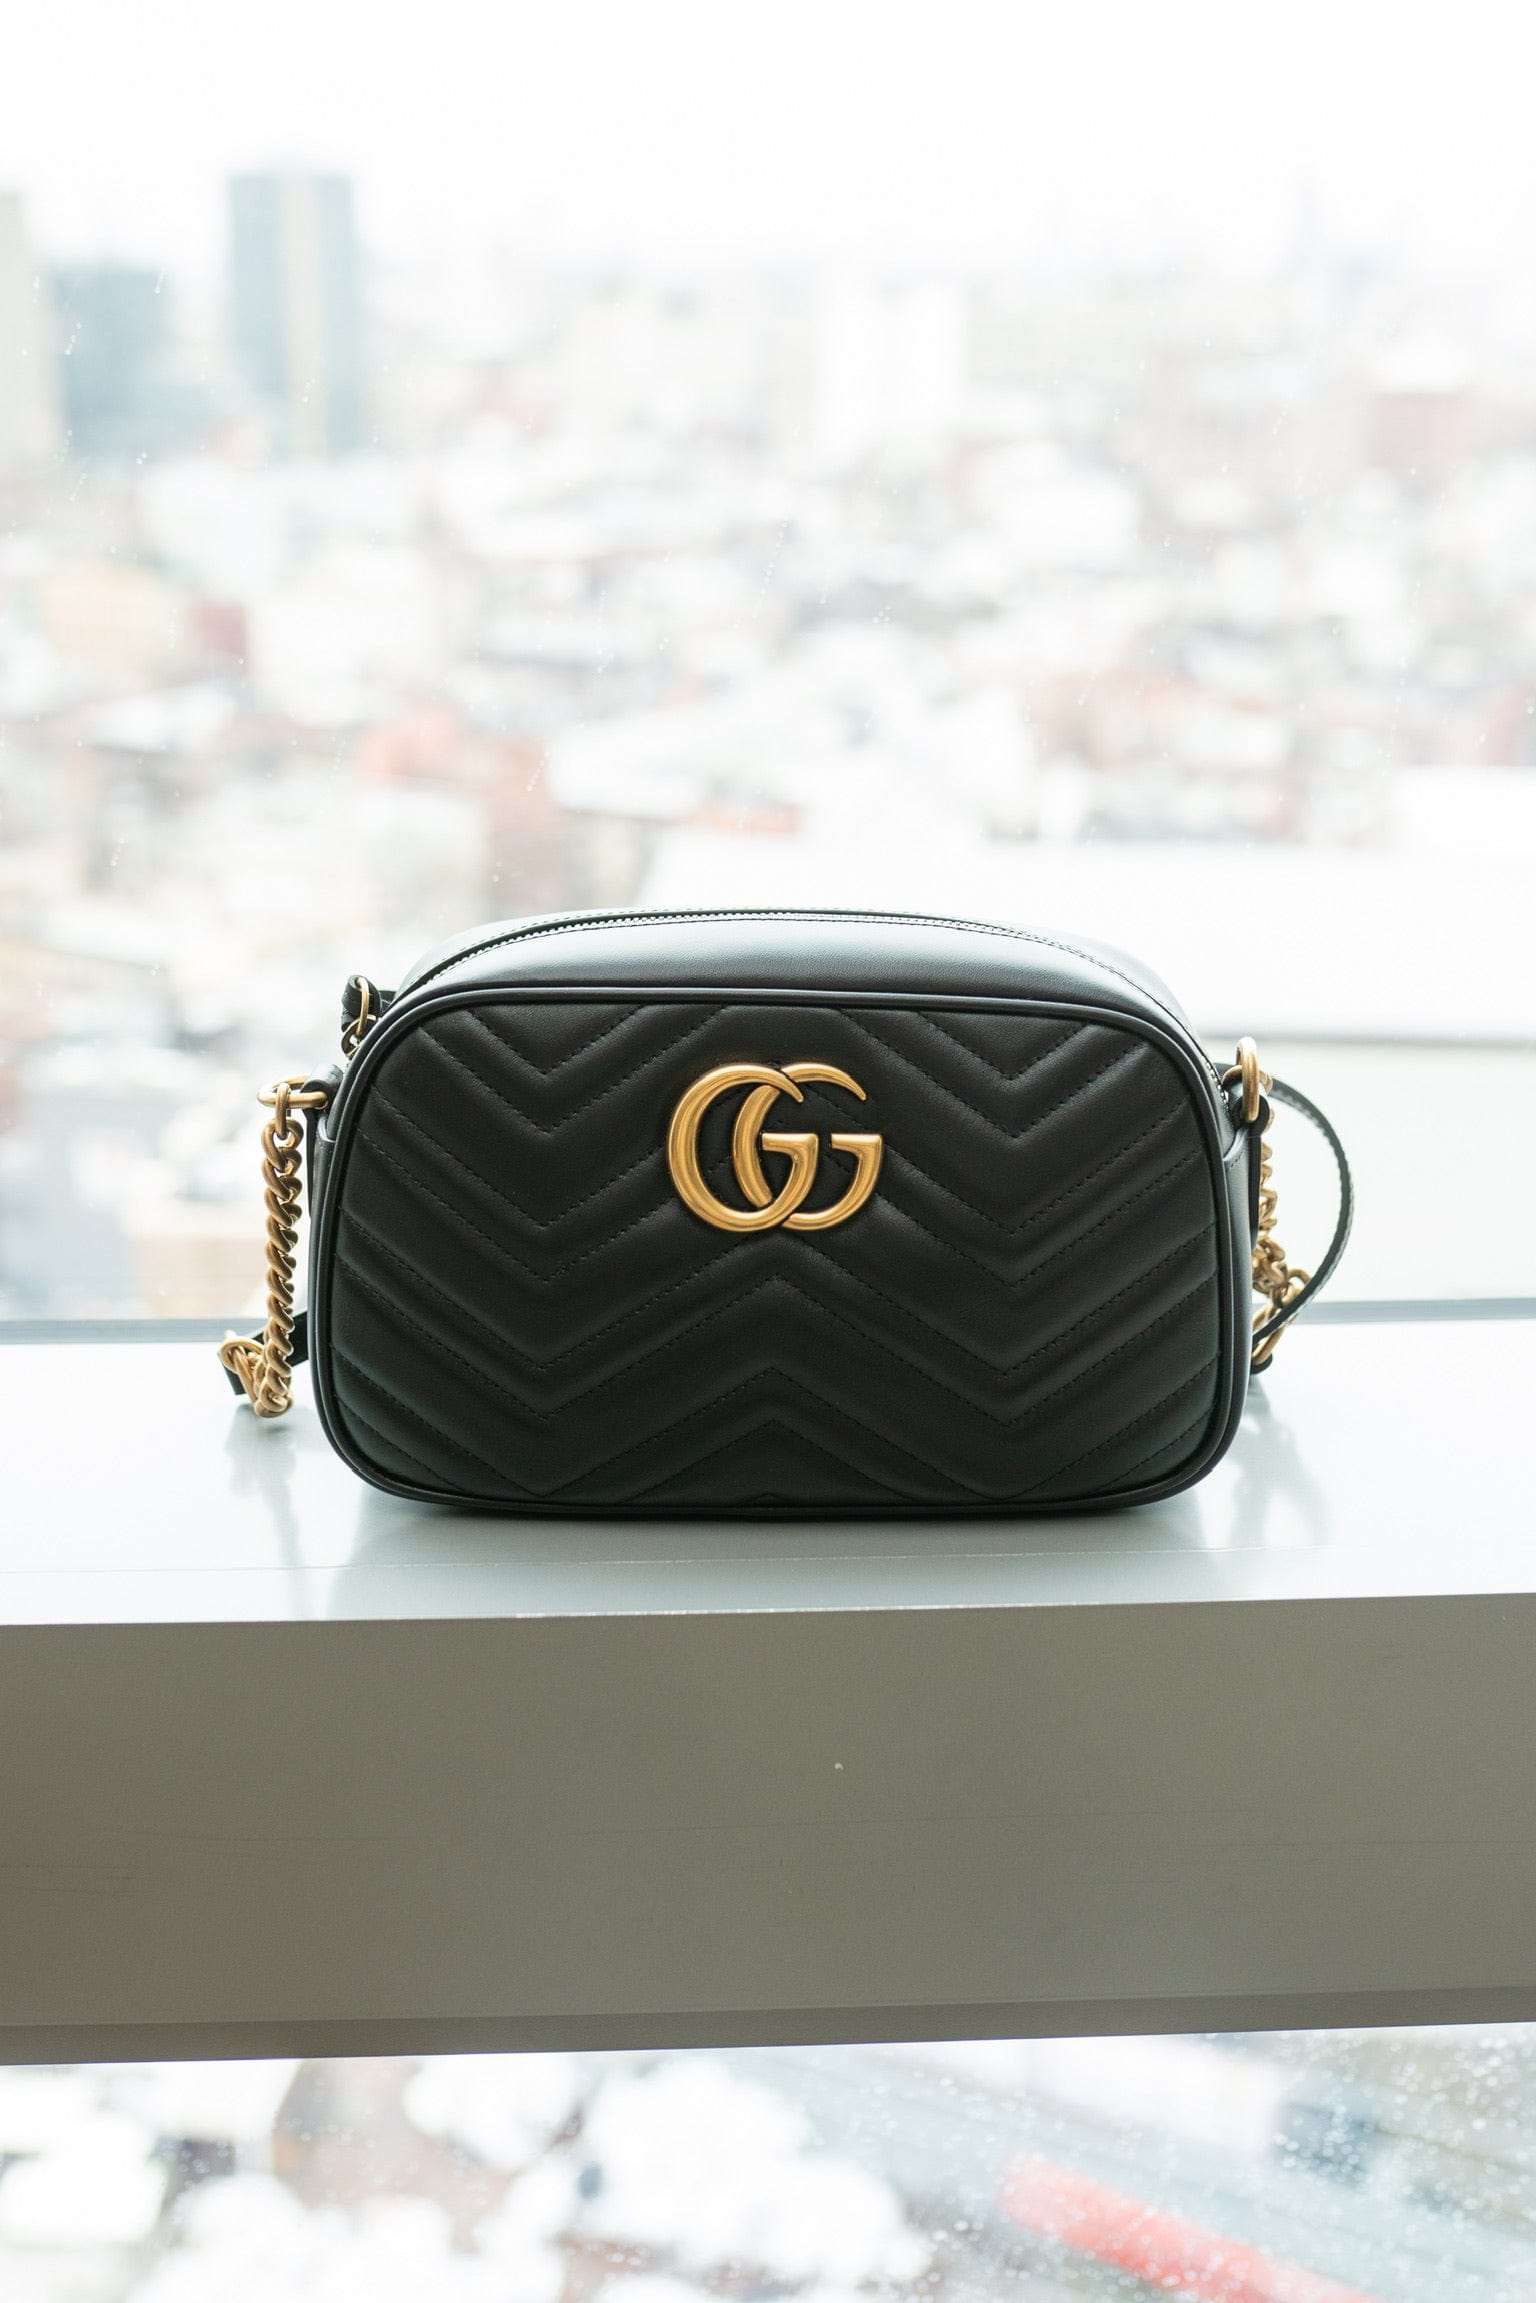 Gucci Gg Marmont Small Matelasse Shoulder Bag ASL3070